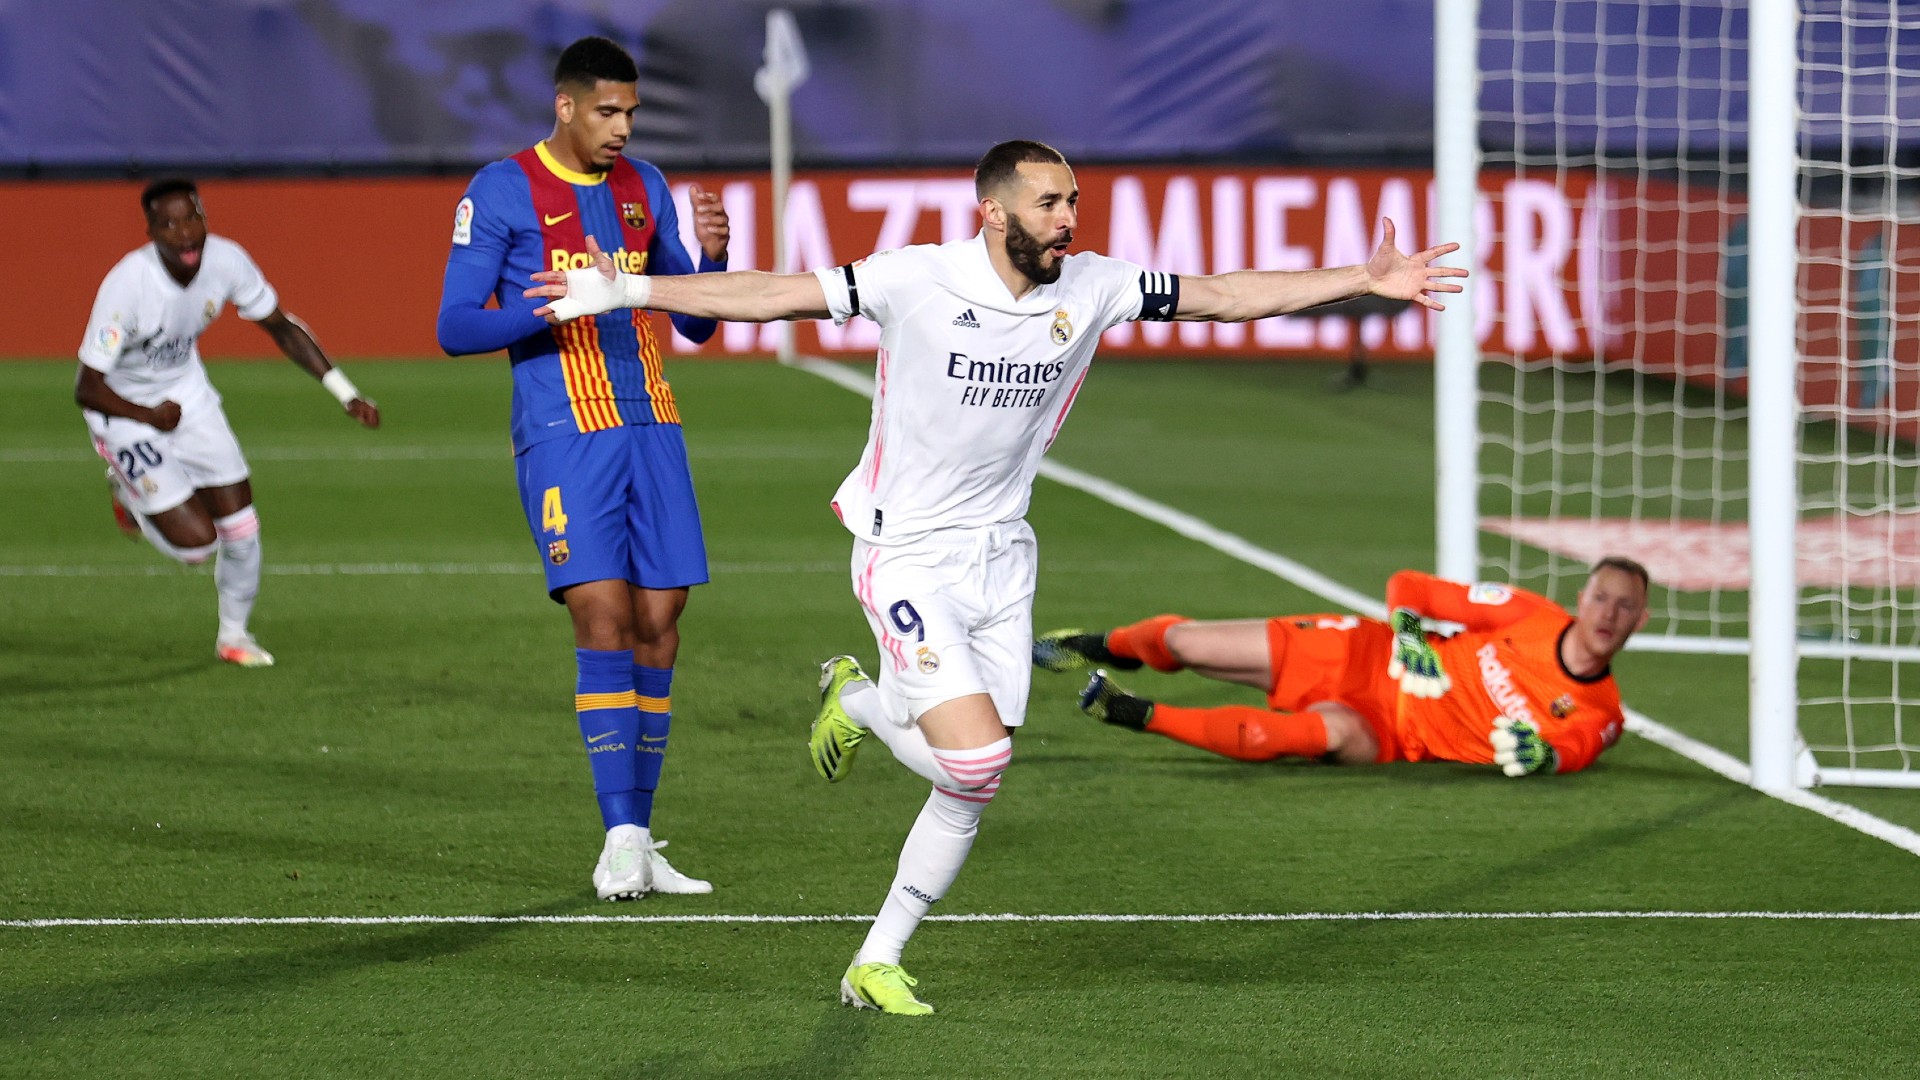 Real Madrid - Barça (2-1), Benzema et le Real s'adjugent le Clasico